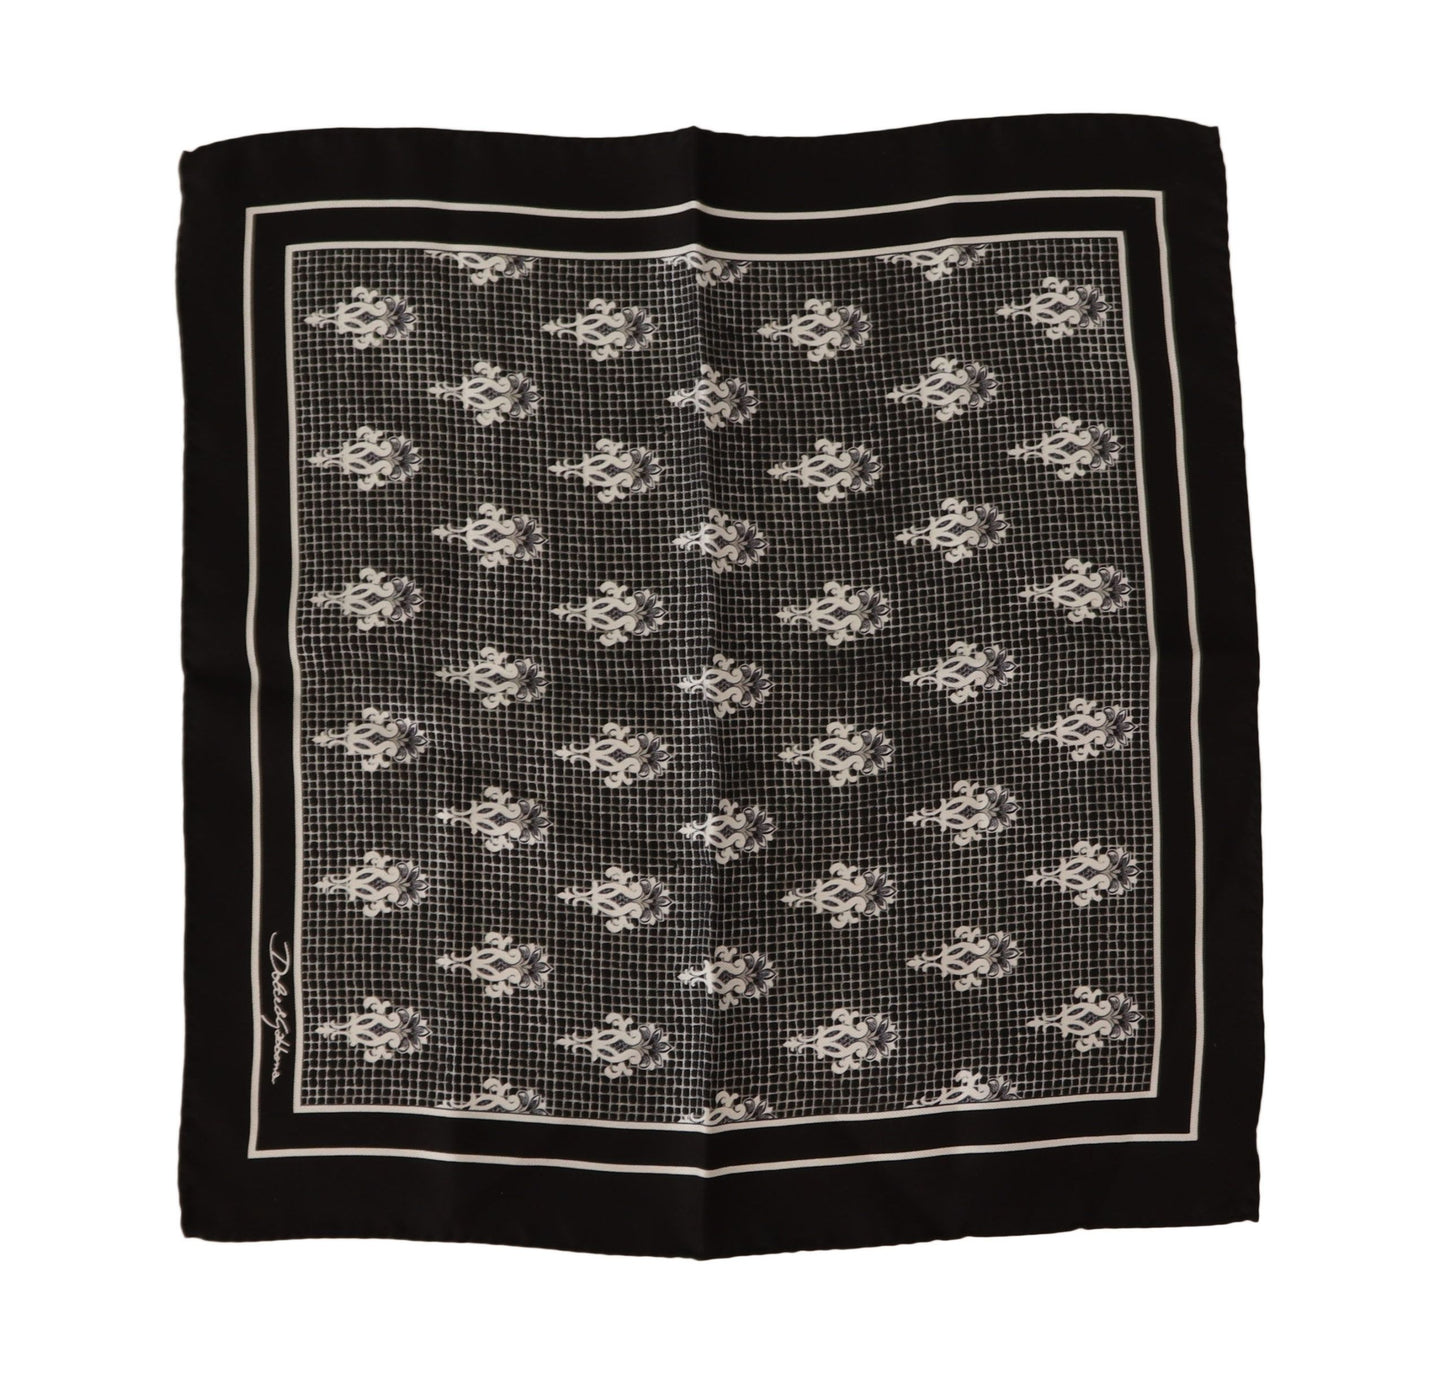 Dolce & Gabbana Elegant Silk Pocket Square Handkerchief